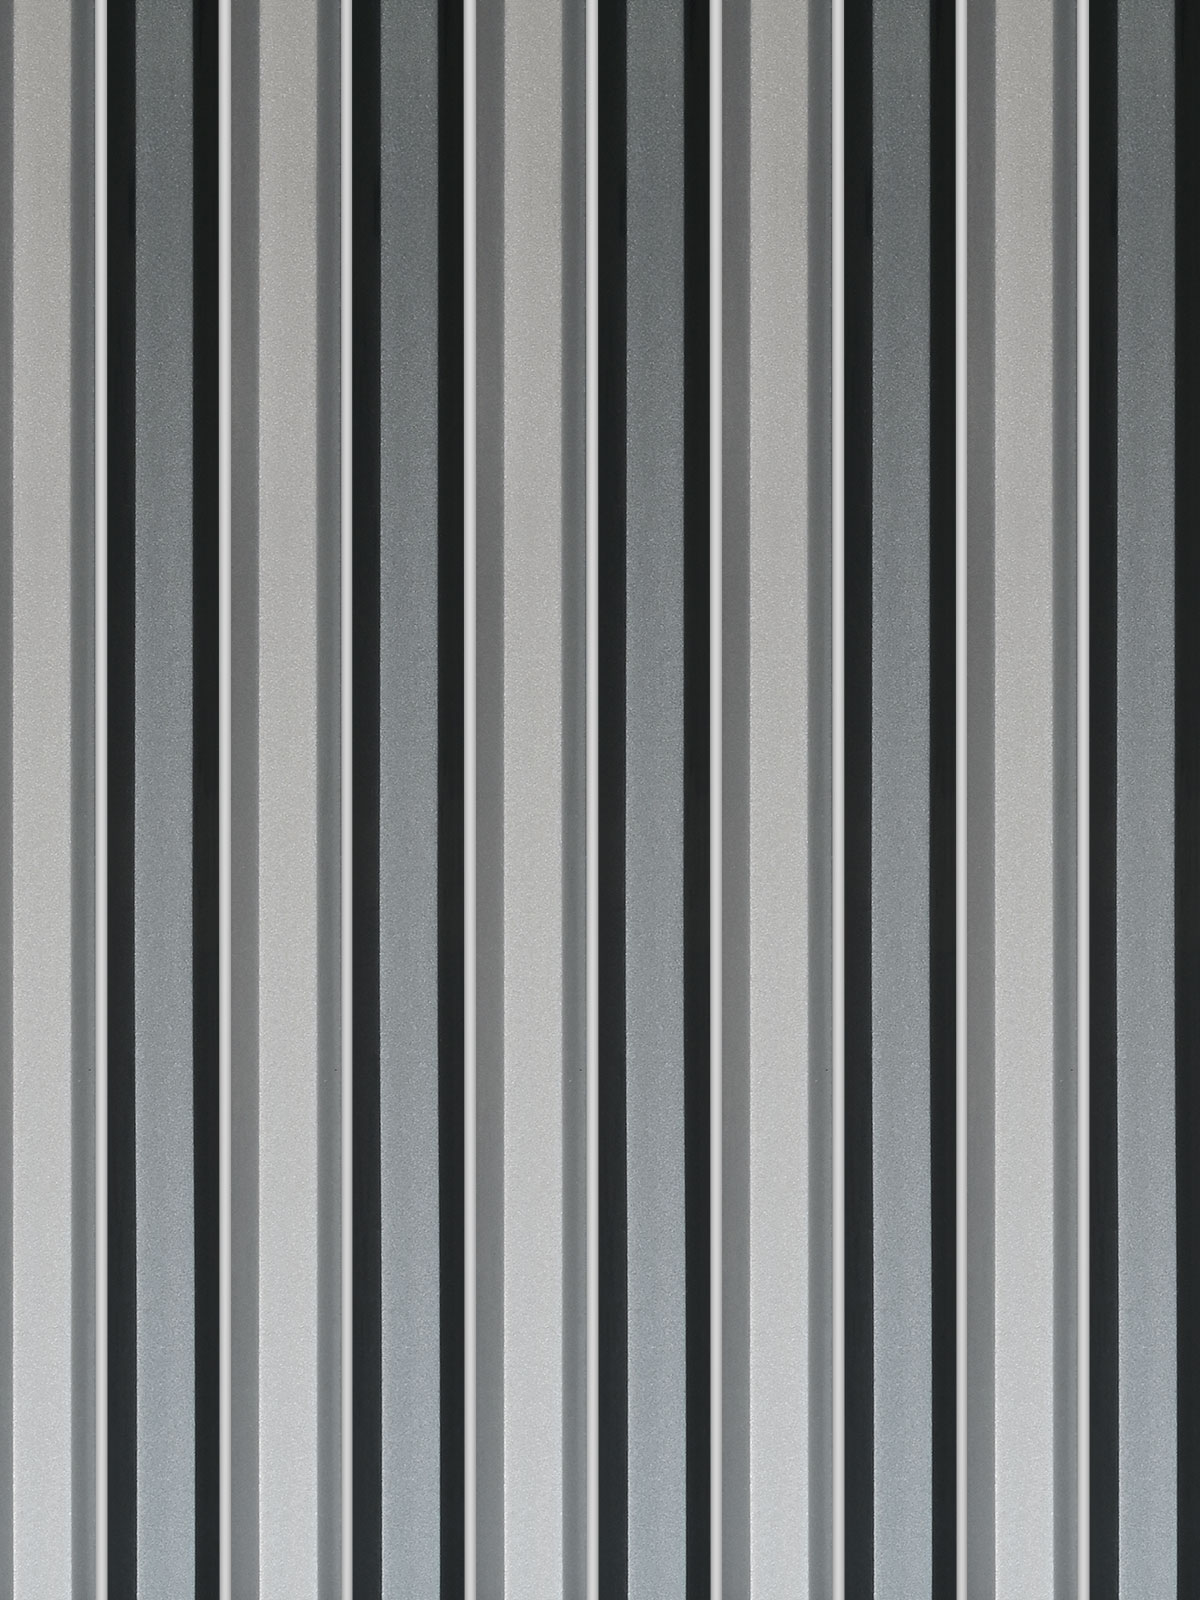 Modern Gray and Black Beveled Metallic Glass Backsplash Tile BA8020 8